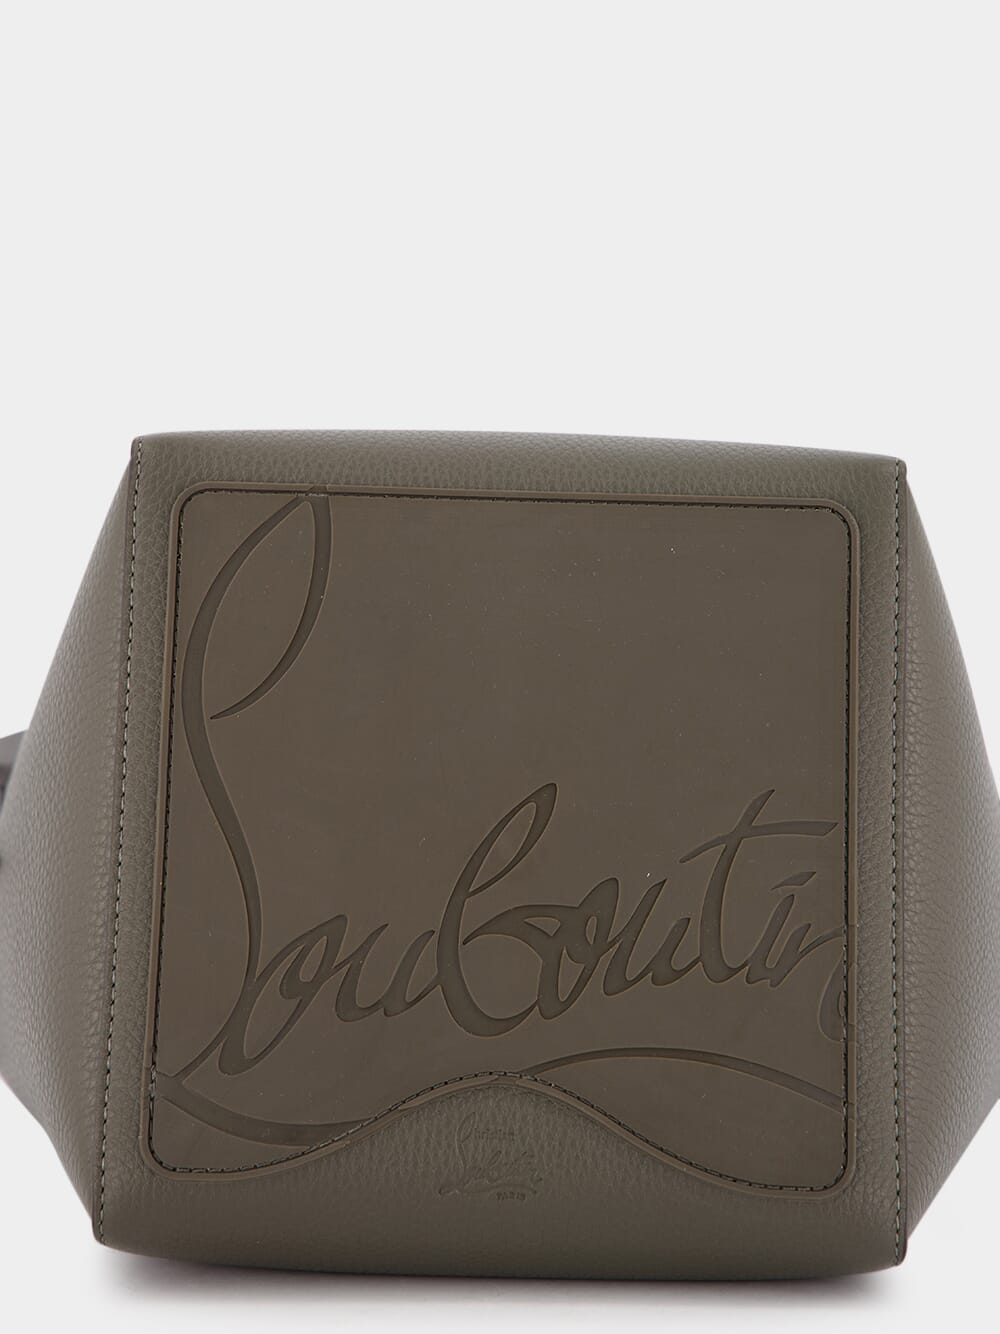 Christian LouboutinCabachic Mini Leather Bucket bag at Fashion Clinic